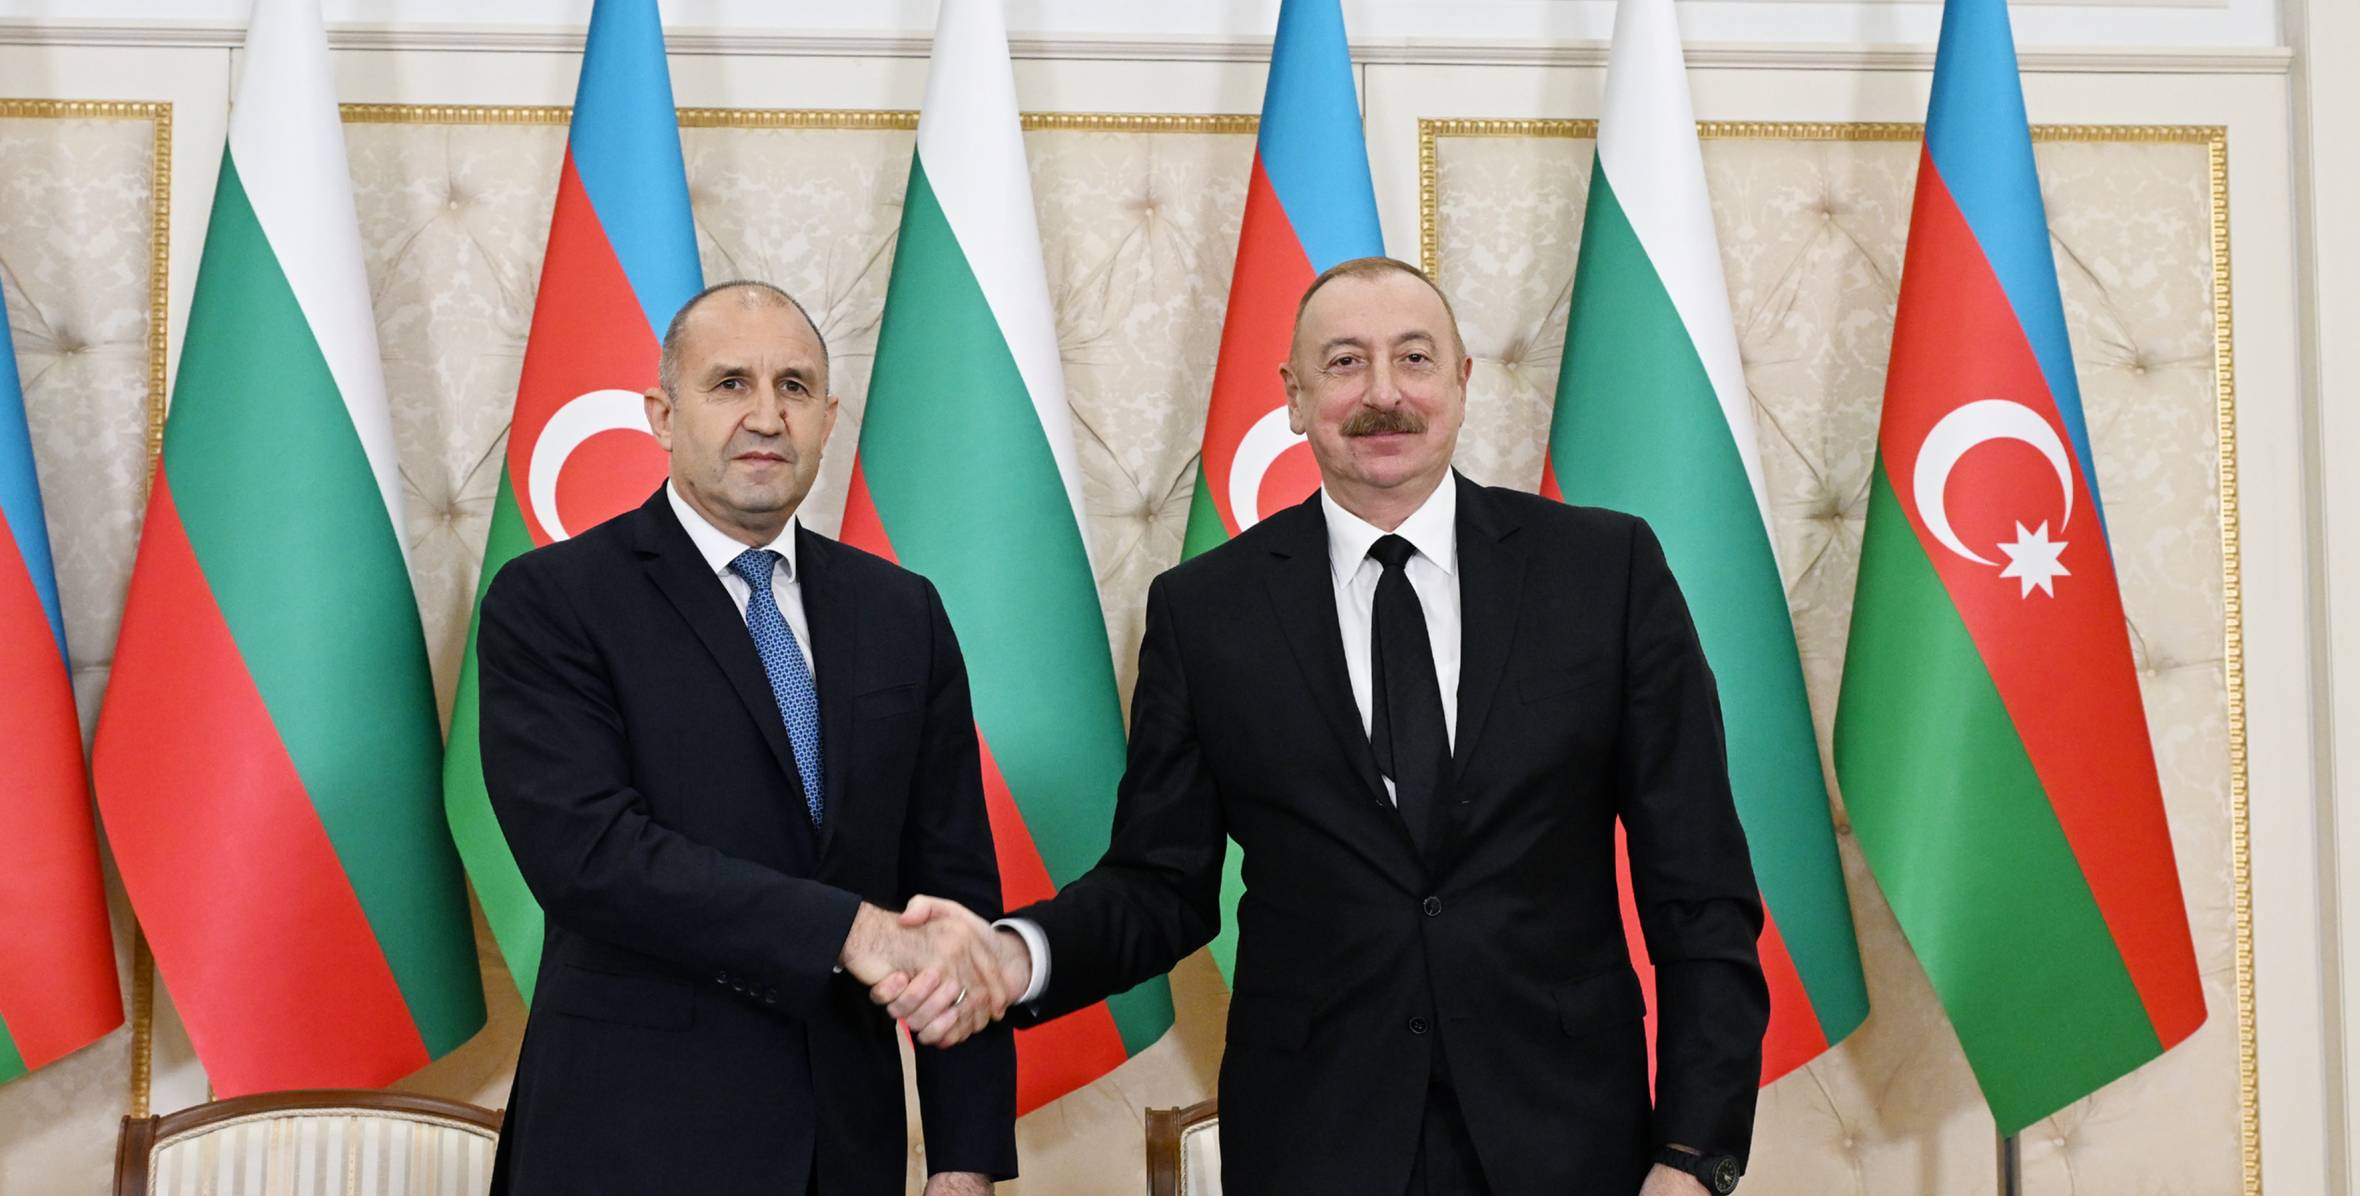 Ilham Aliyev and President Rumen Radev made press statements